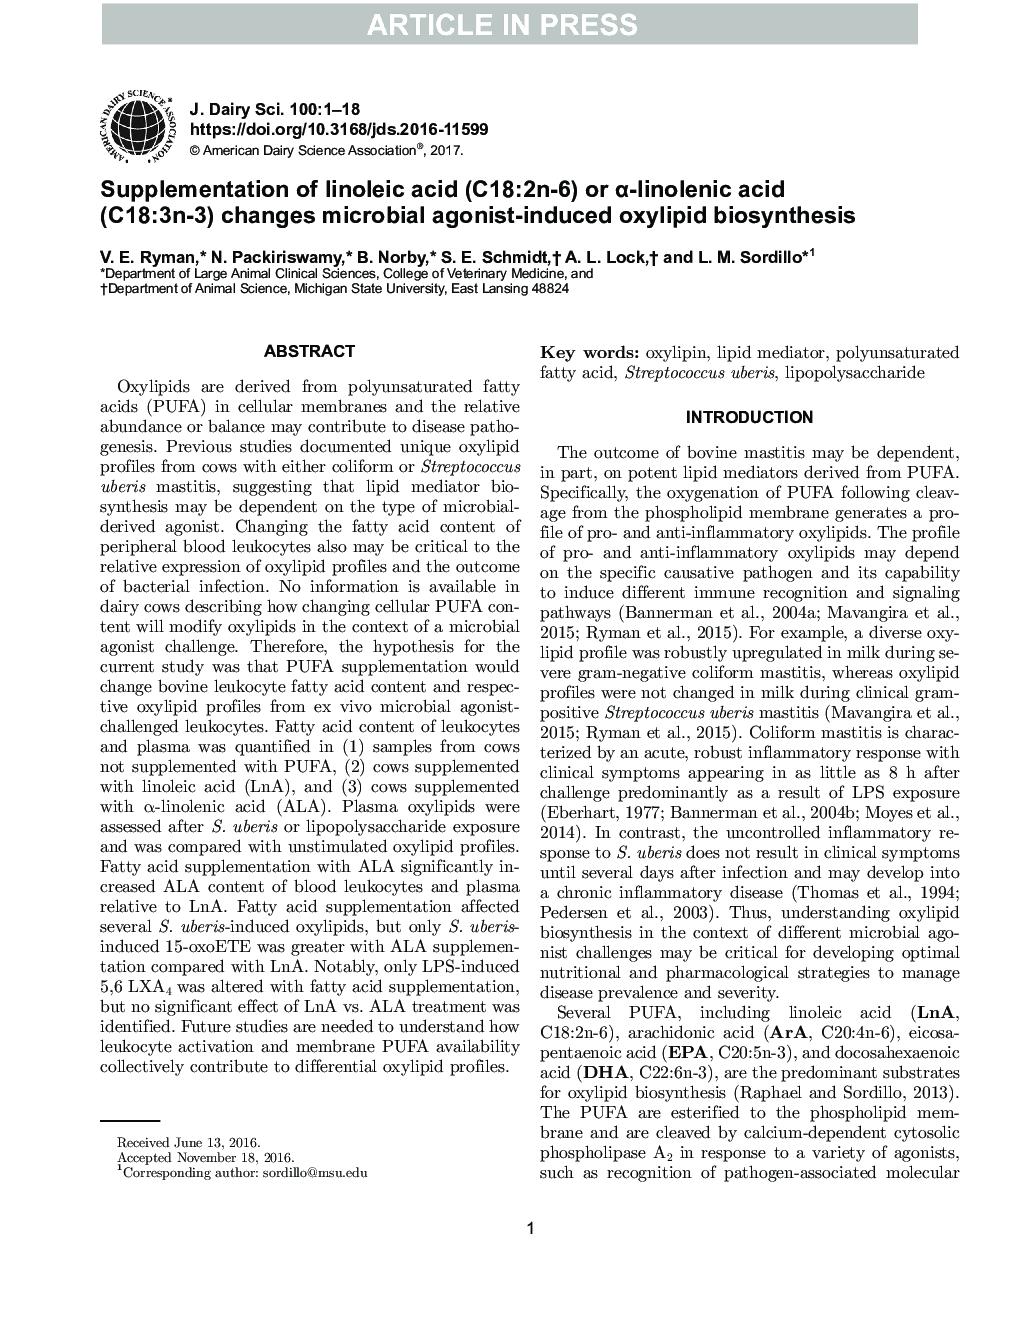 Supplementation of linoleic acid (C18:2n-6) or Î±-linolenic acid (C18:3n-3) changes microbial agonist-induced oxylipid biosynthesis